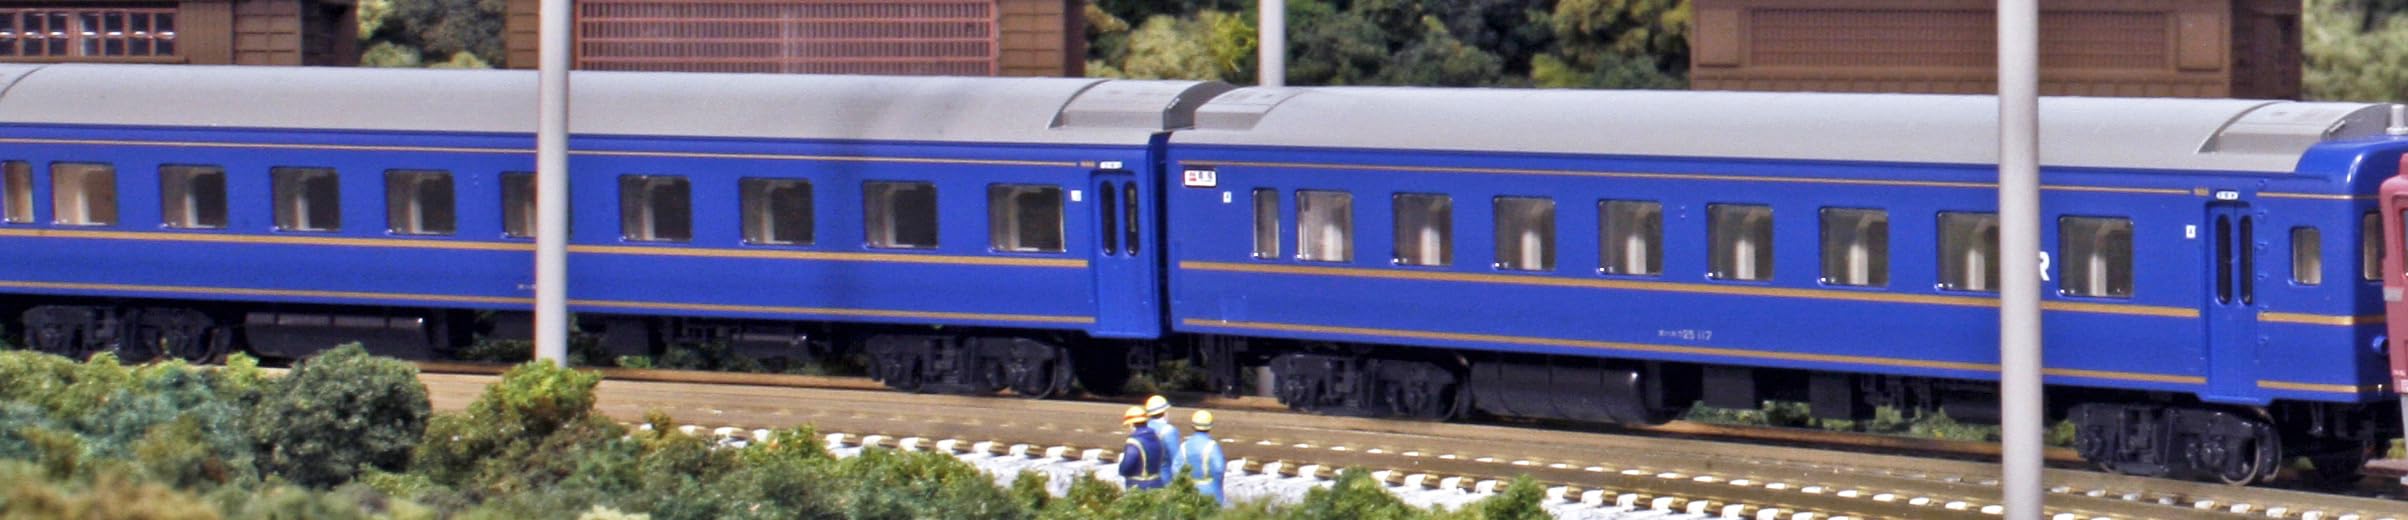 Kato N Gauge 24 Series Japon Nihonkai Sleeper Limited Express 6 Ensemble de voitures 10-881 Modèle ferroviaire